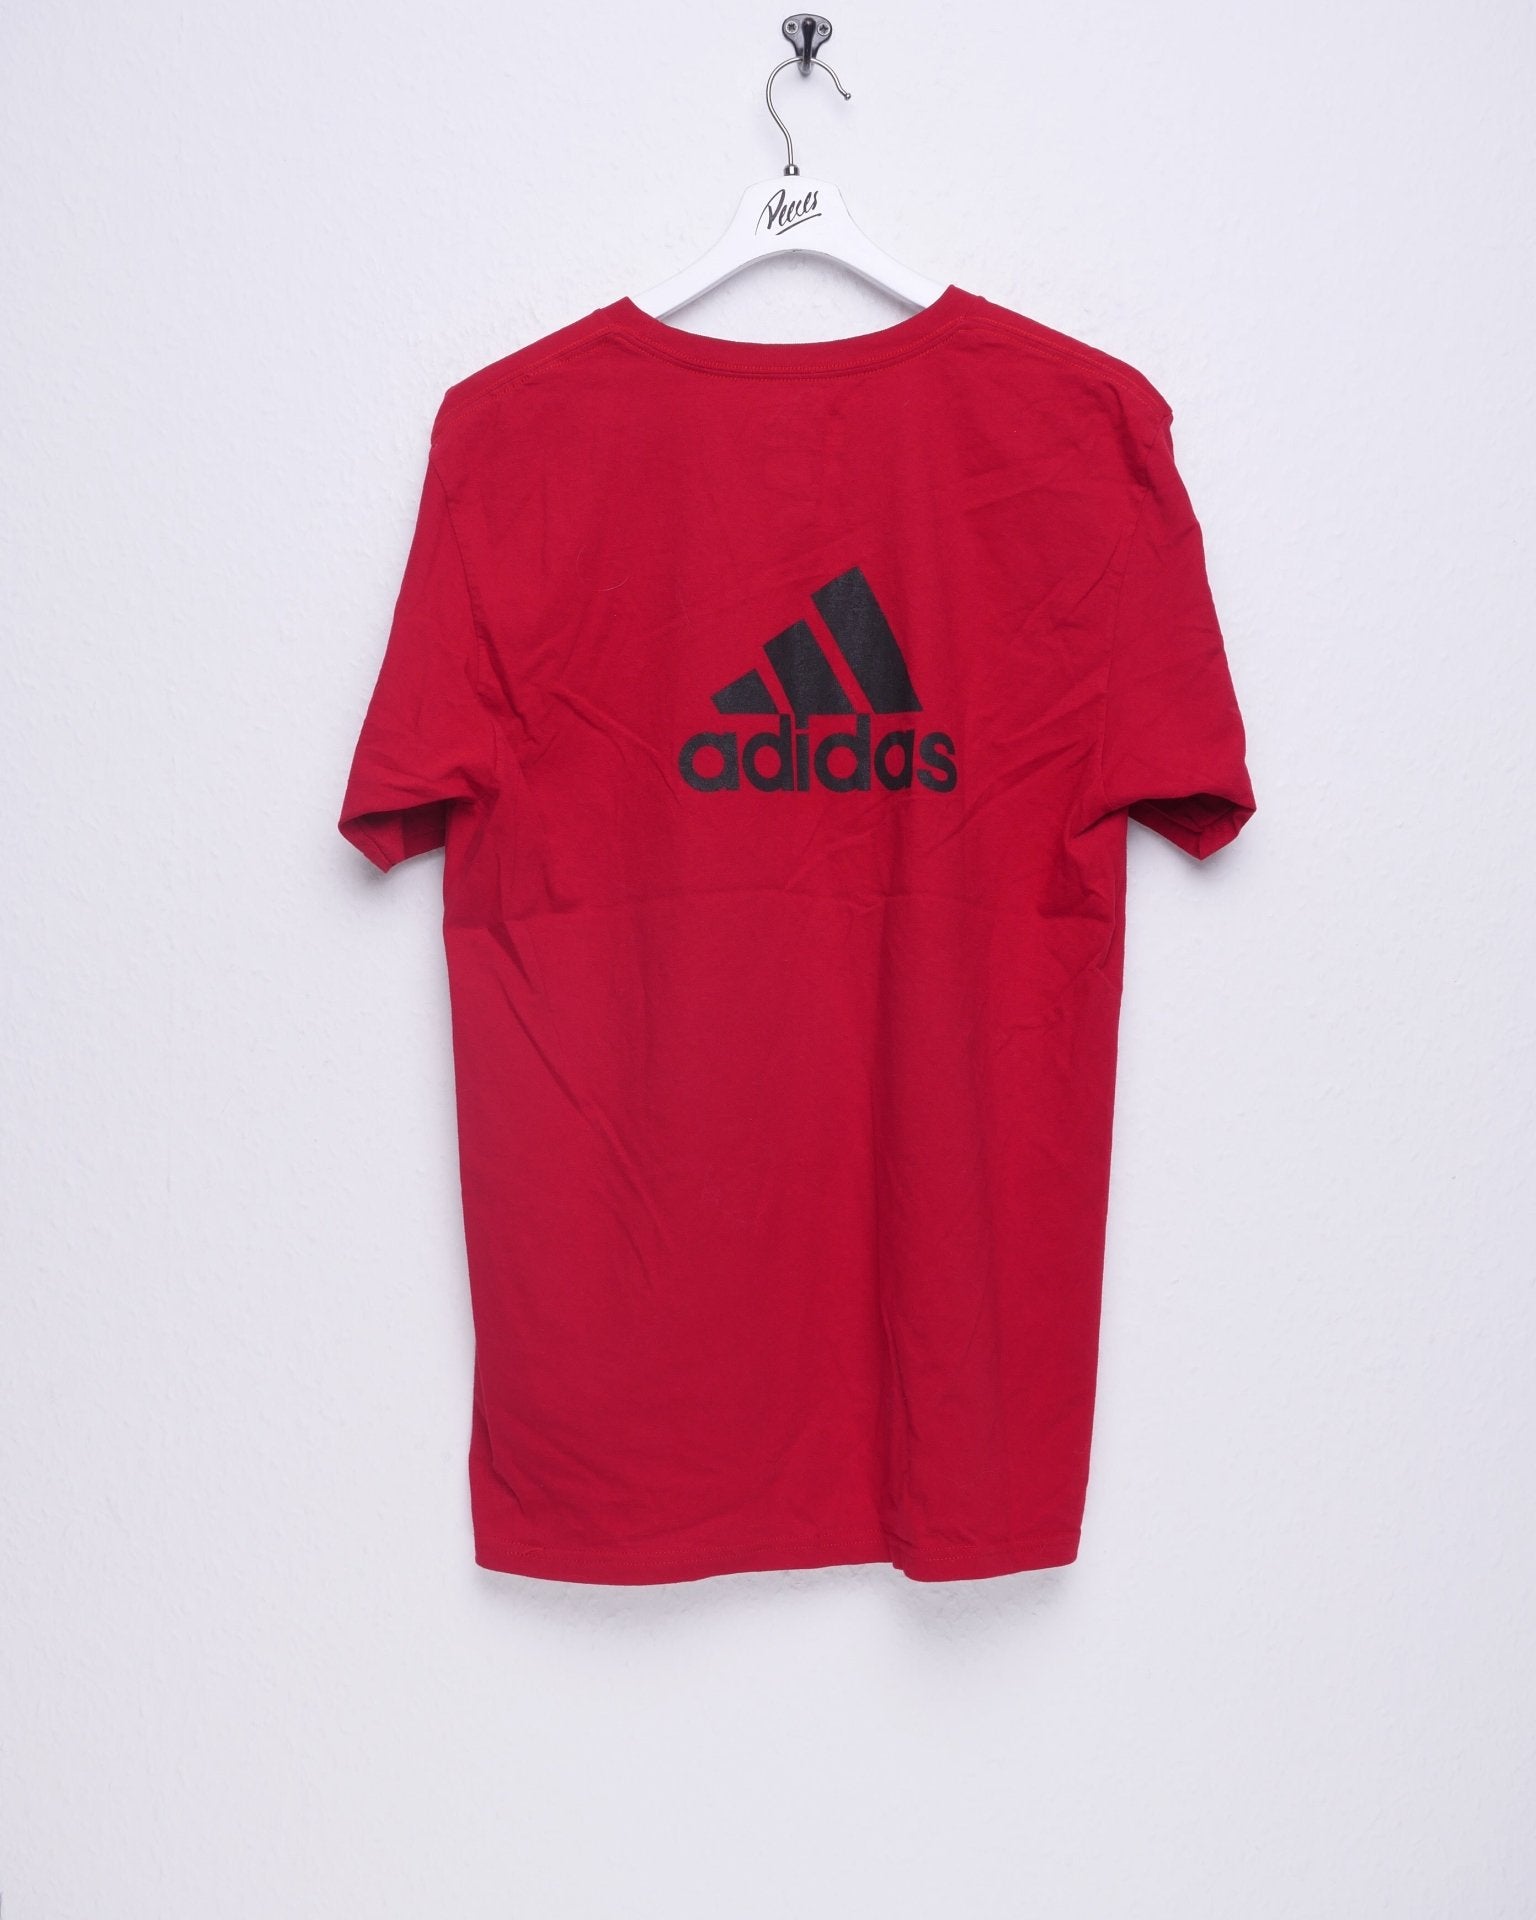 Adidas printed 'The DW Foundation' Graphic Vintgae Shirt - Peeces